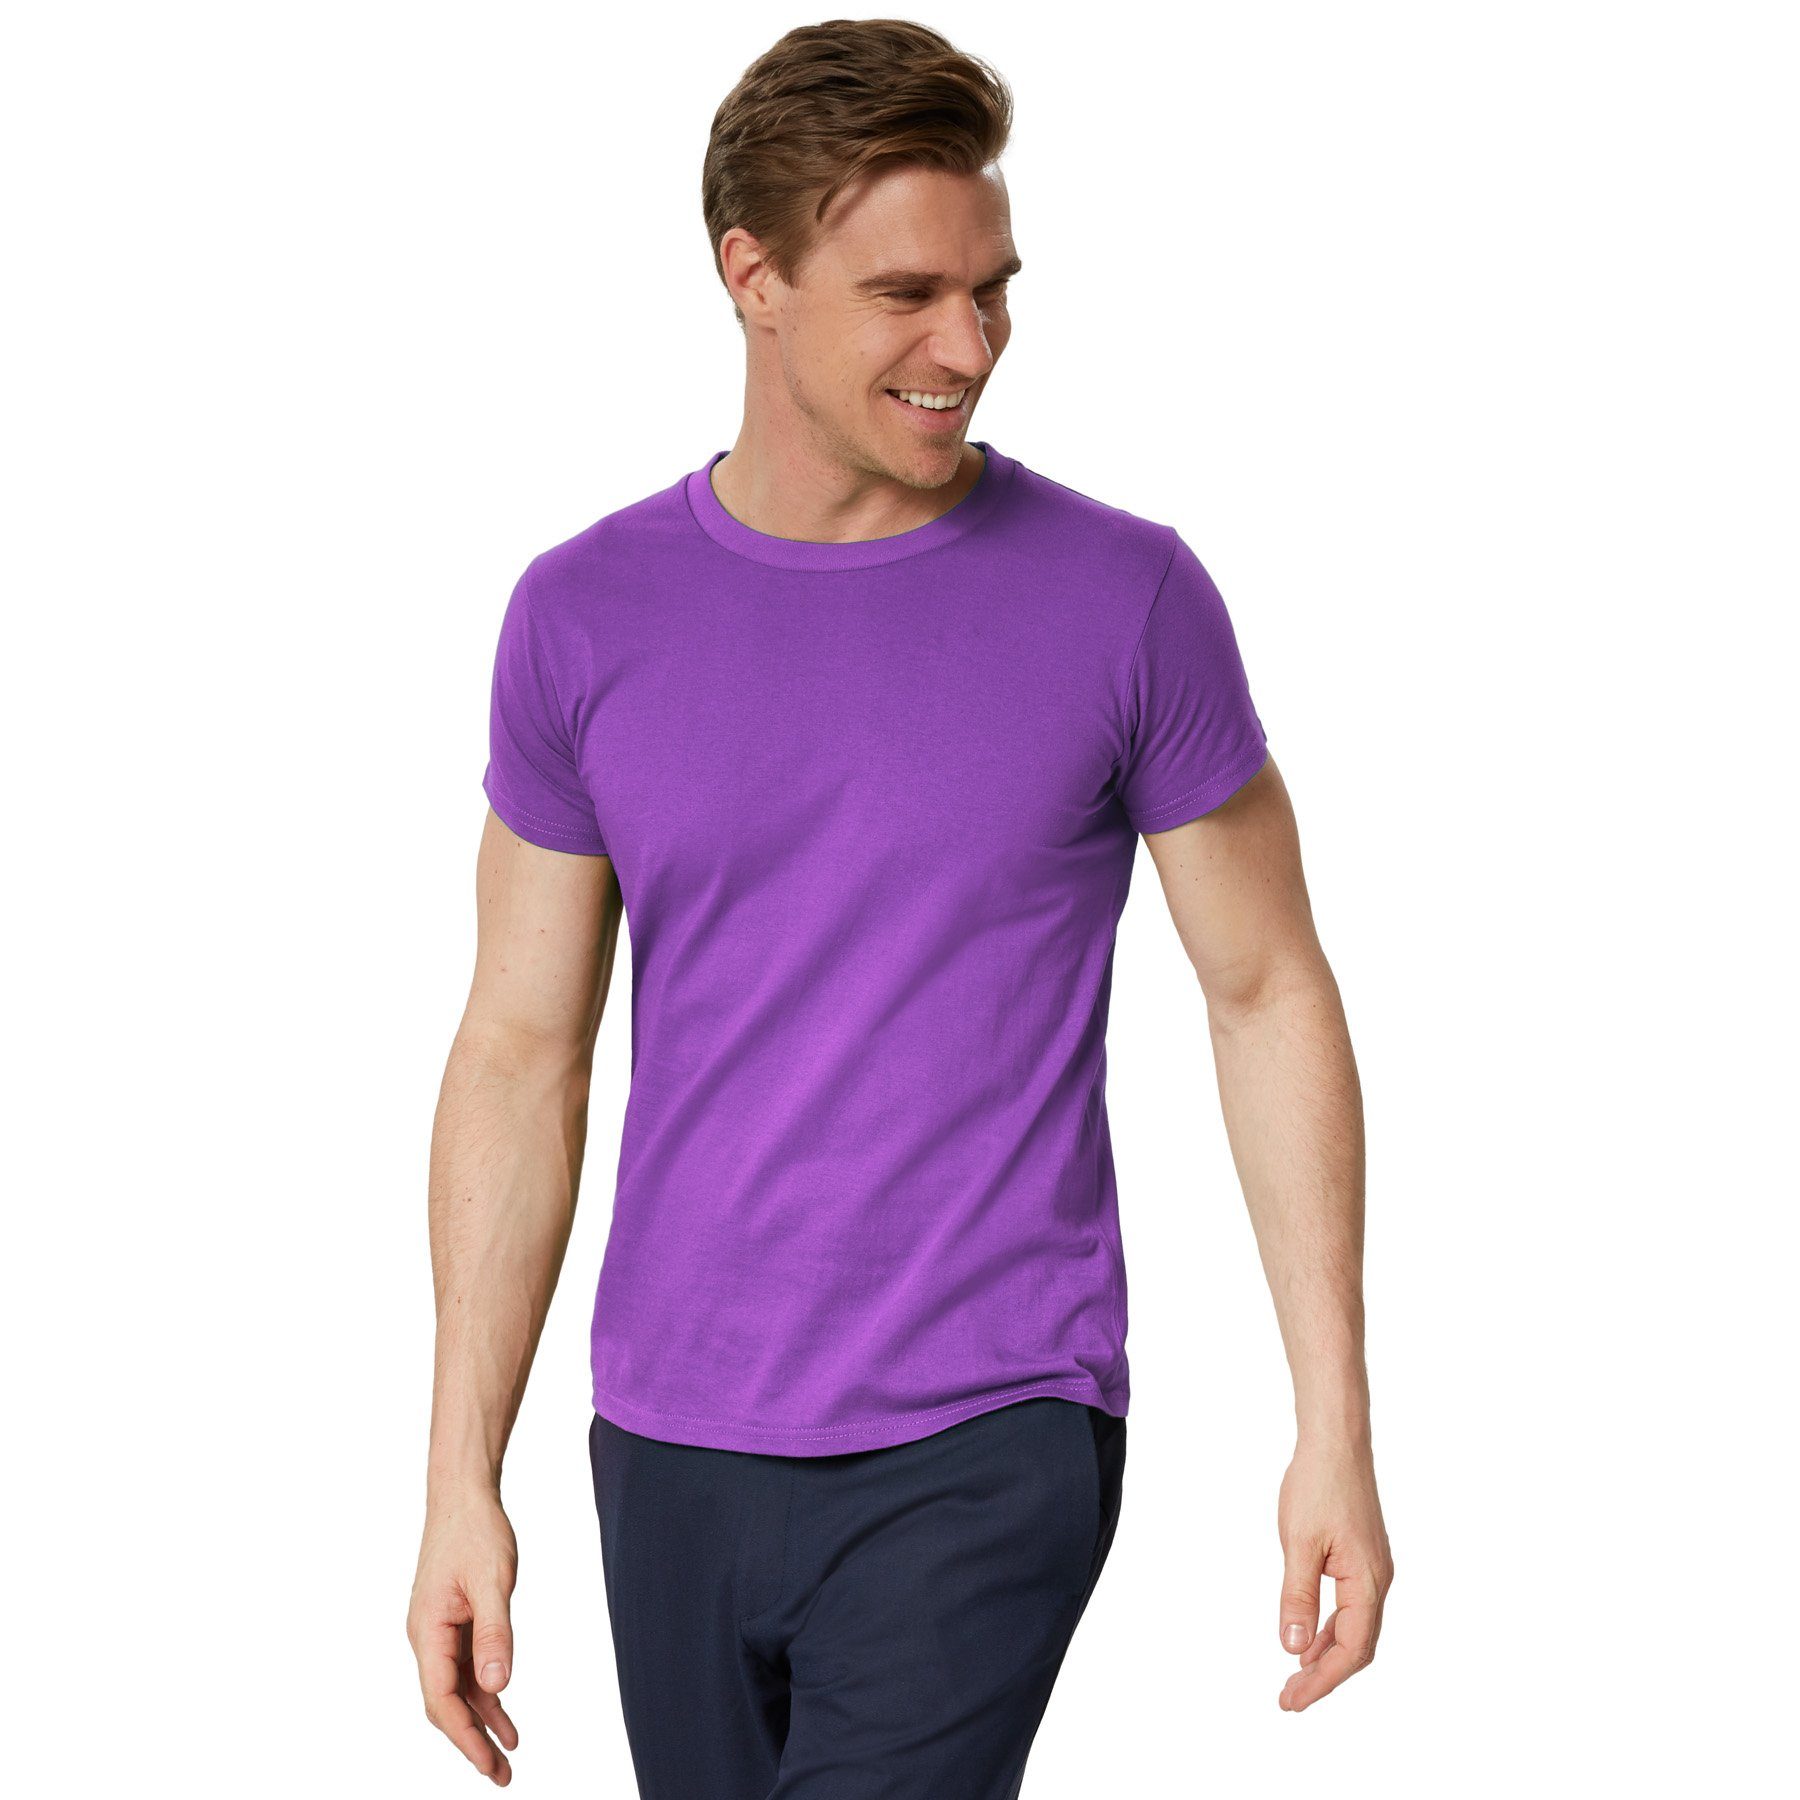 passender Preis dressforfun T-Shirt lila Männer Rundhals T-Shirt